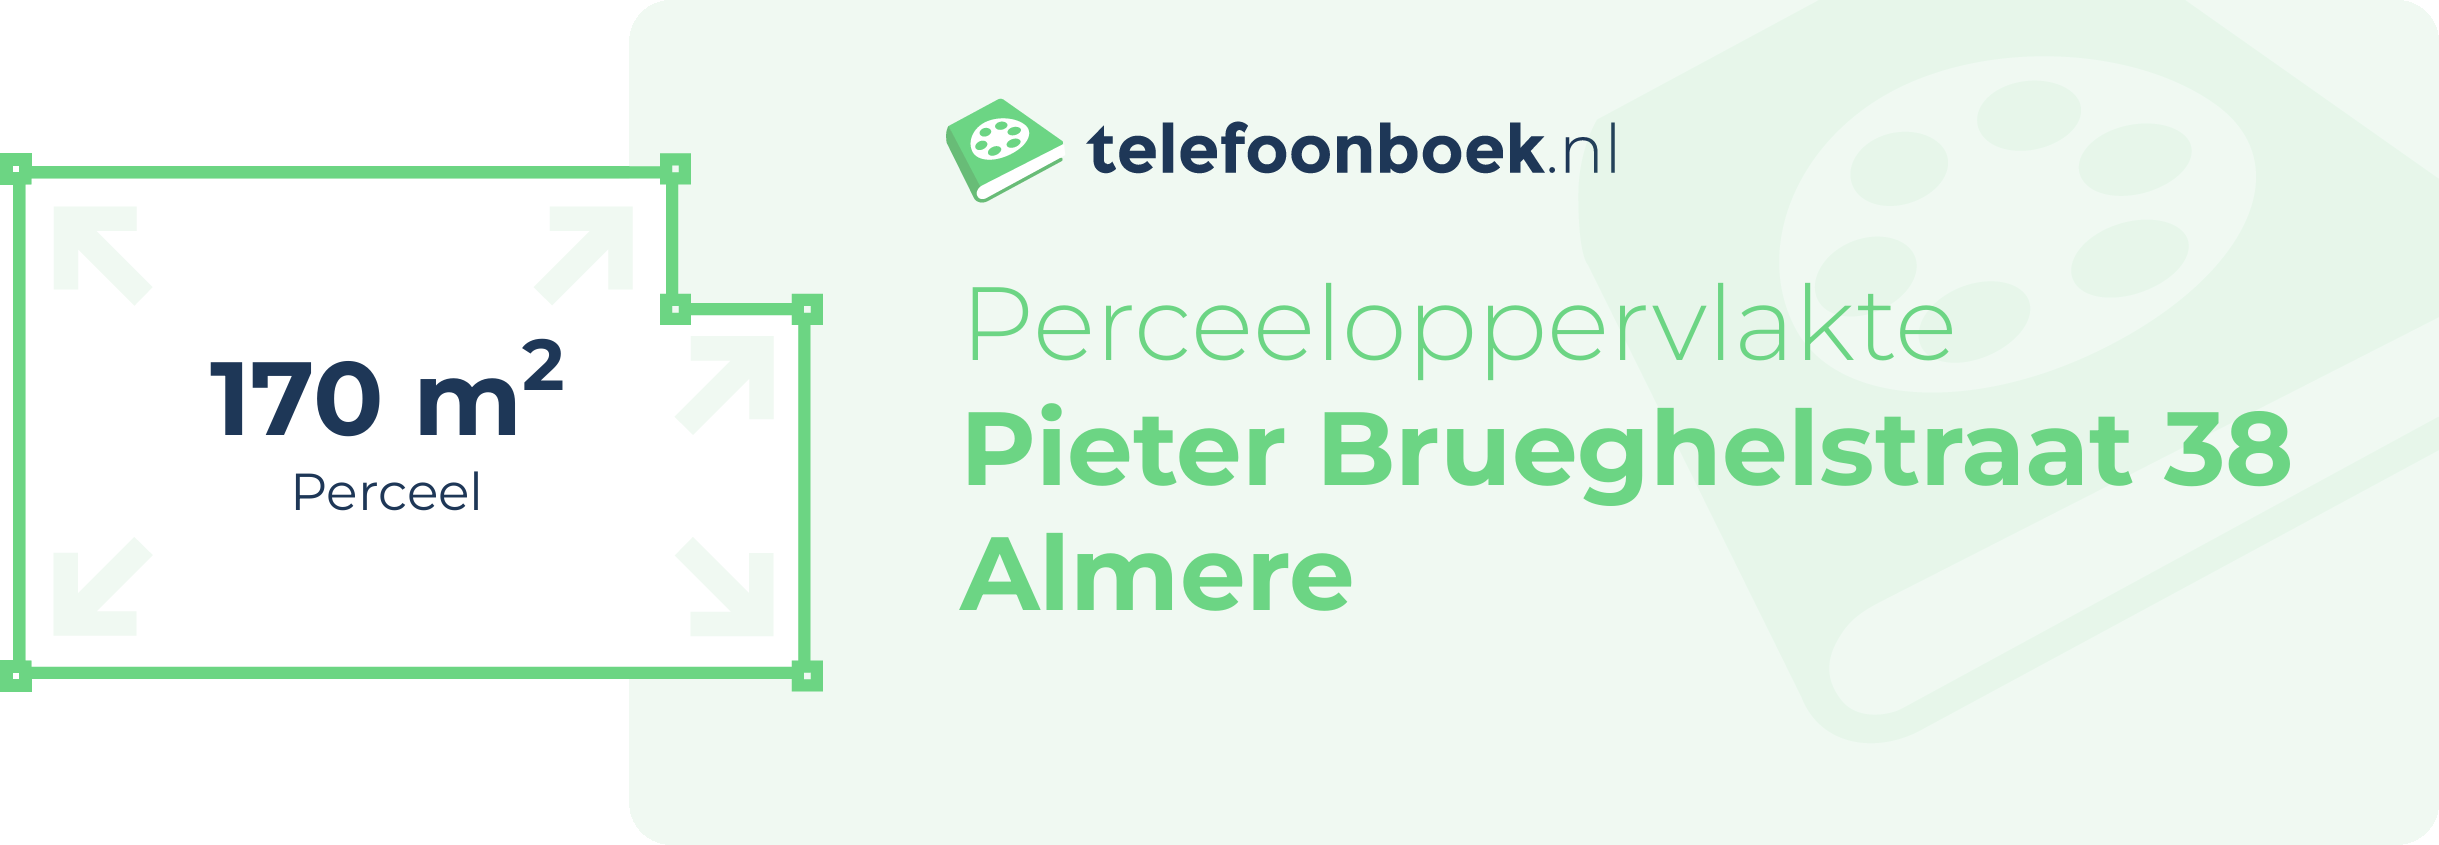 Perceeloppervlakte Pieter Brueghelstraat 38 Almere